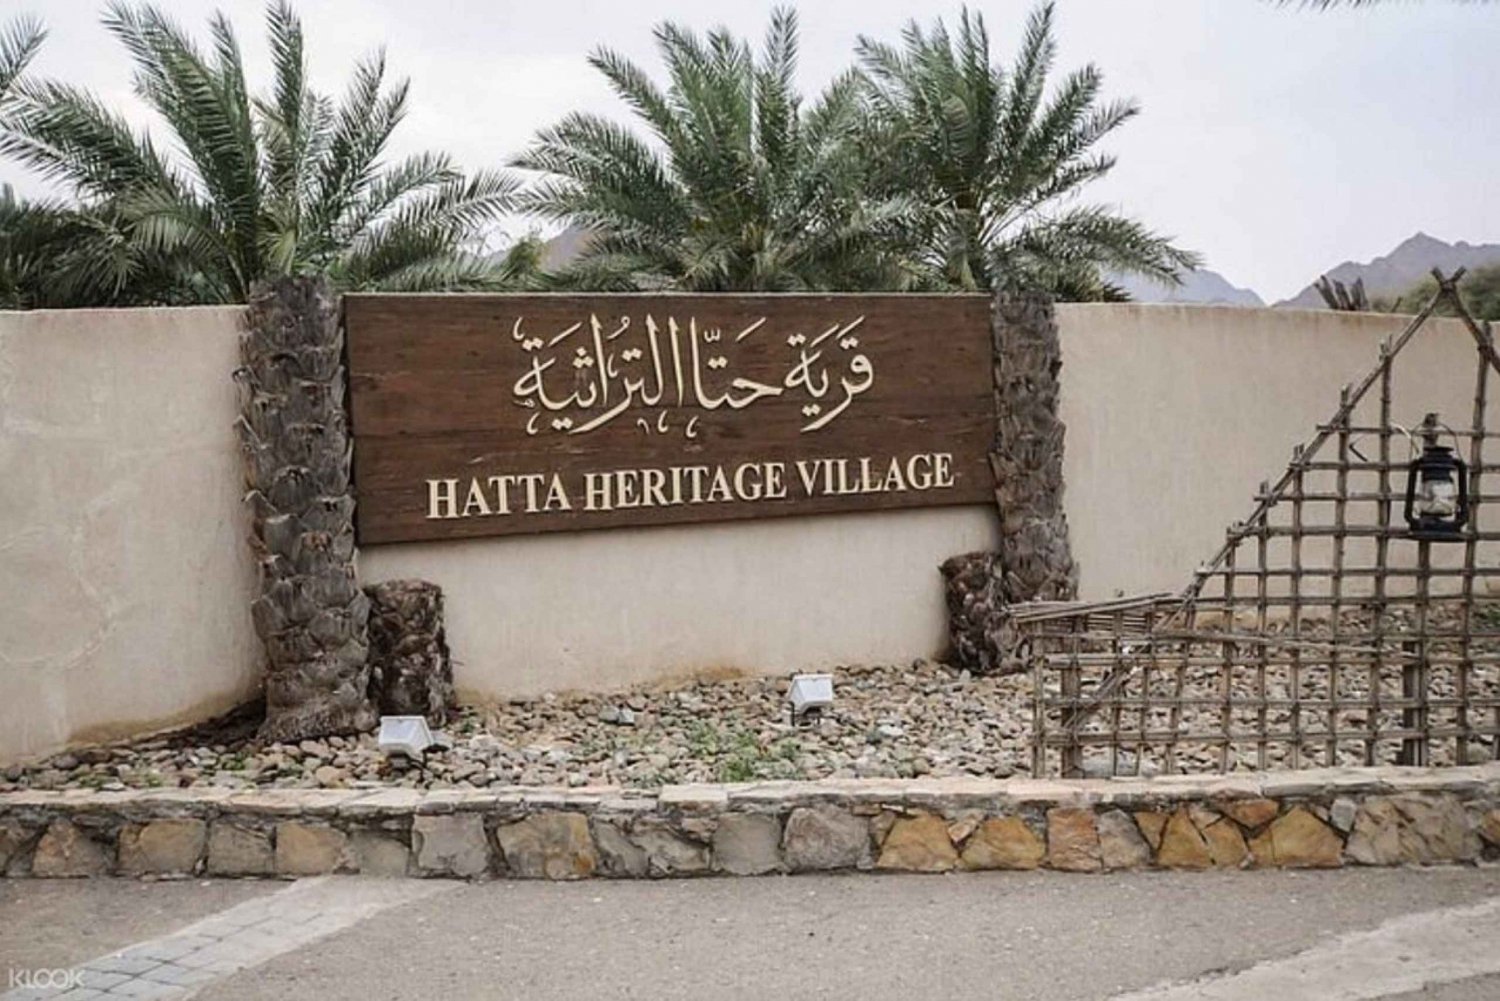 Dubai/Sharjah: Tagestour nach Hatta City und ins Hajar-Gebirge